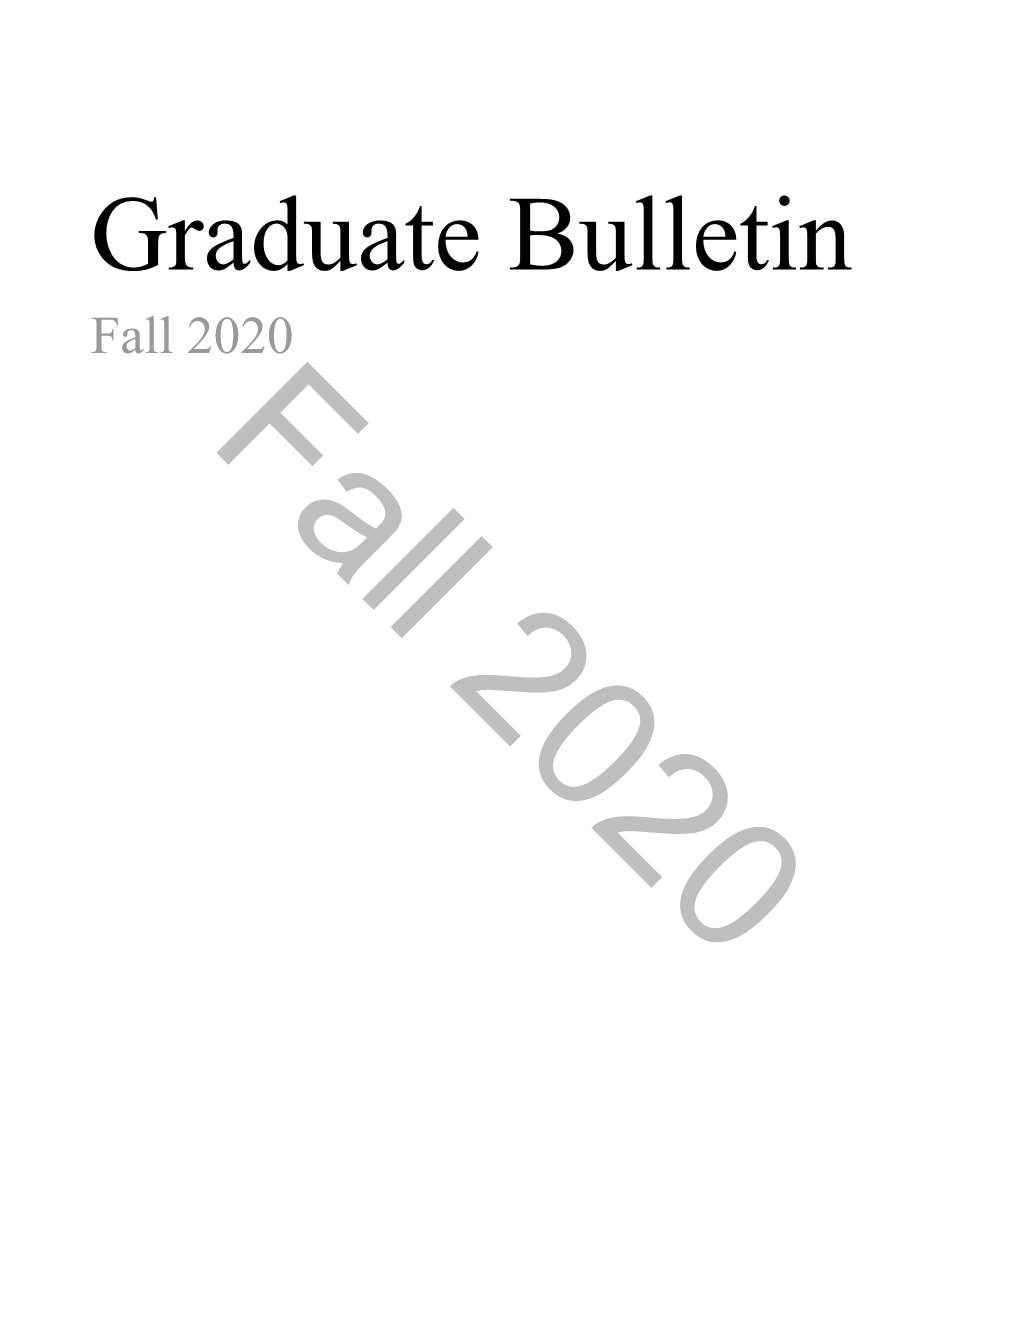 Graduate Bulletin Fall 2020 Fall 2020 Fall 2020 ADMISSIONS Fall 2020